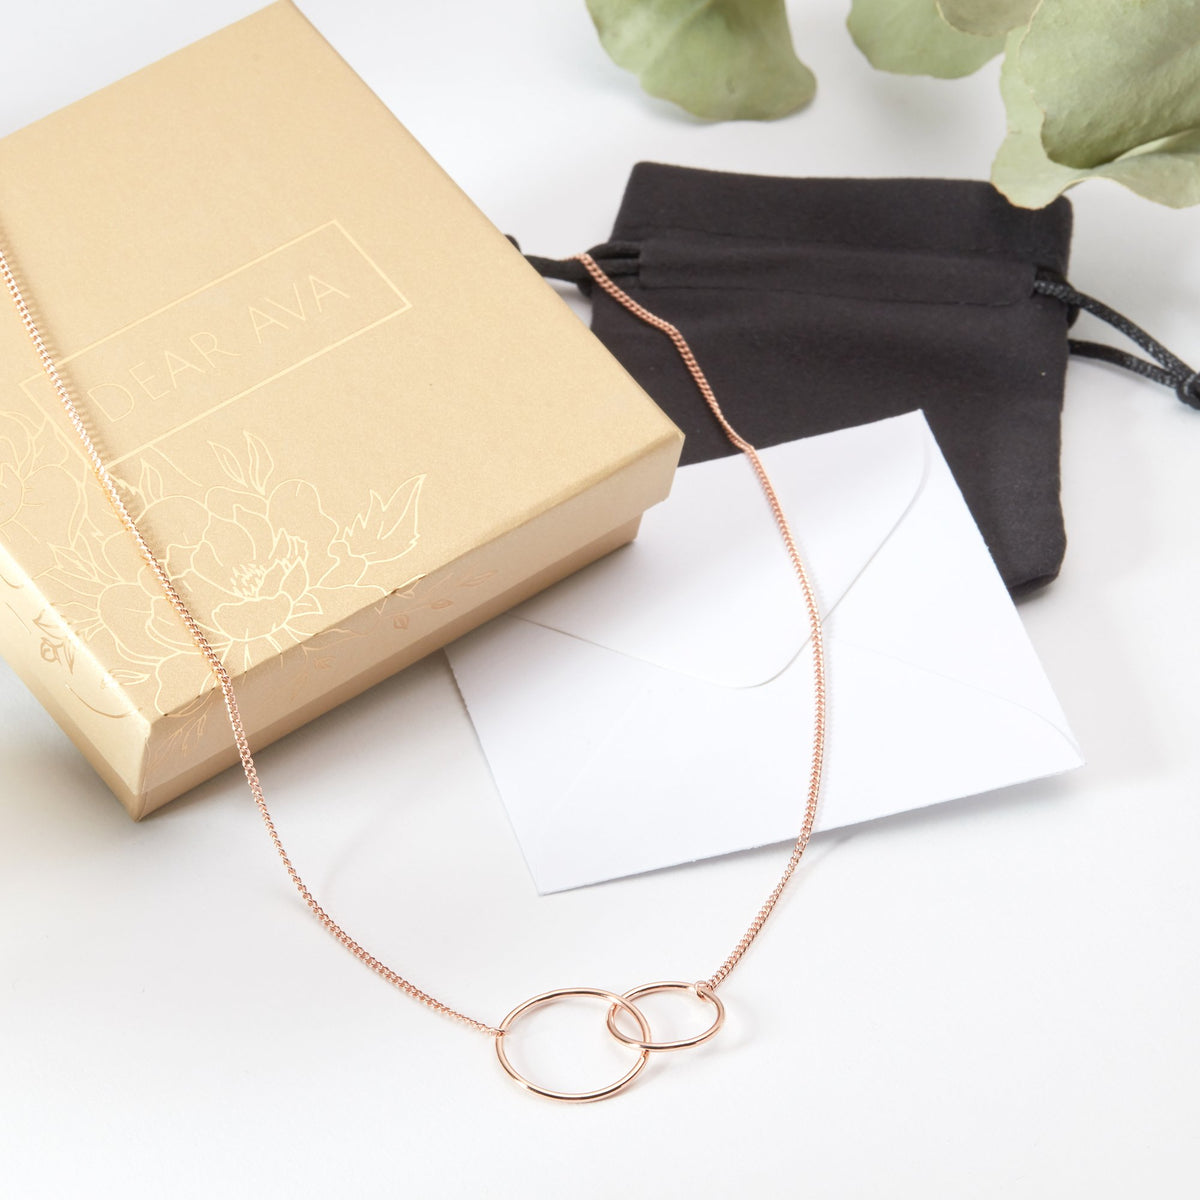 Capricorn Zodiac Gift Necklace - Dear Ava, Jewelry / Necklaces / Pendants